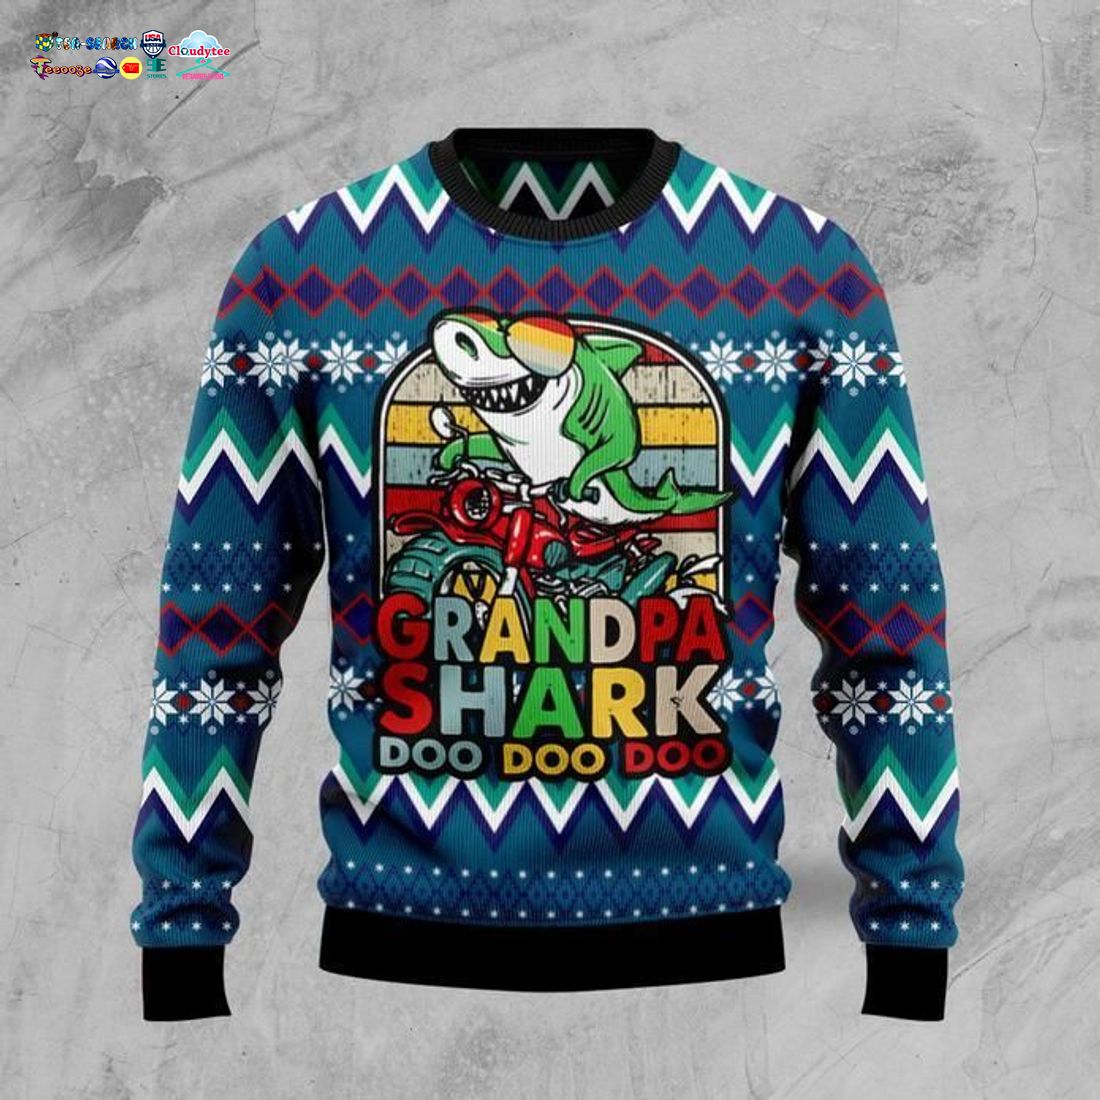 Grandpa Shark Doo Doo Doo Ugly Christmas Sweater